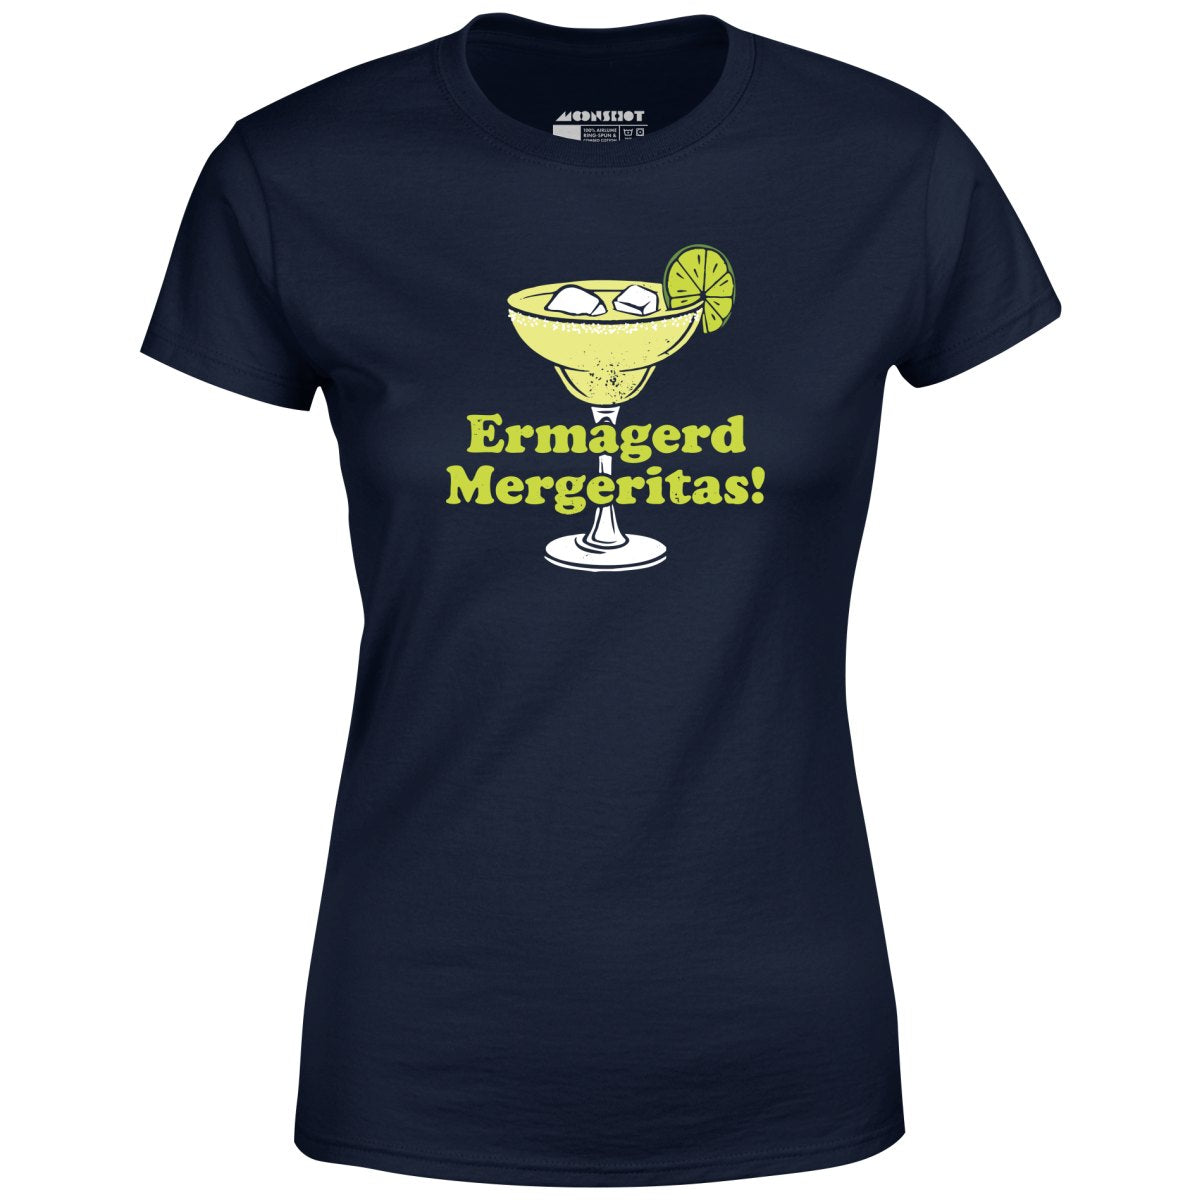 Ermagerd Mergeritas! - Women's T-Shirt